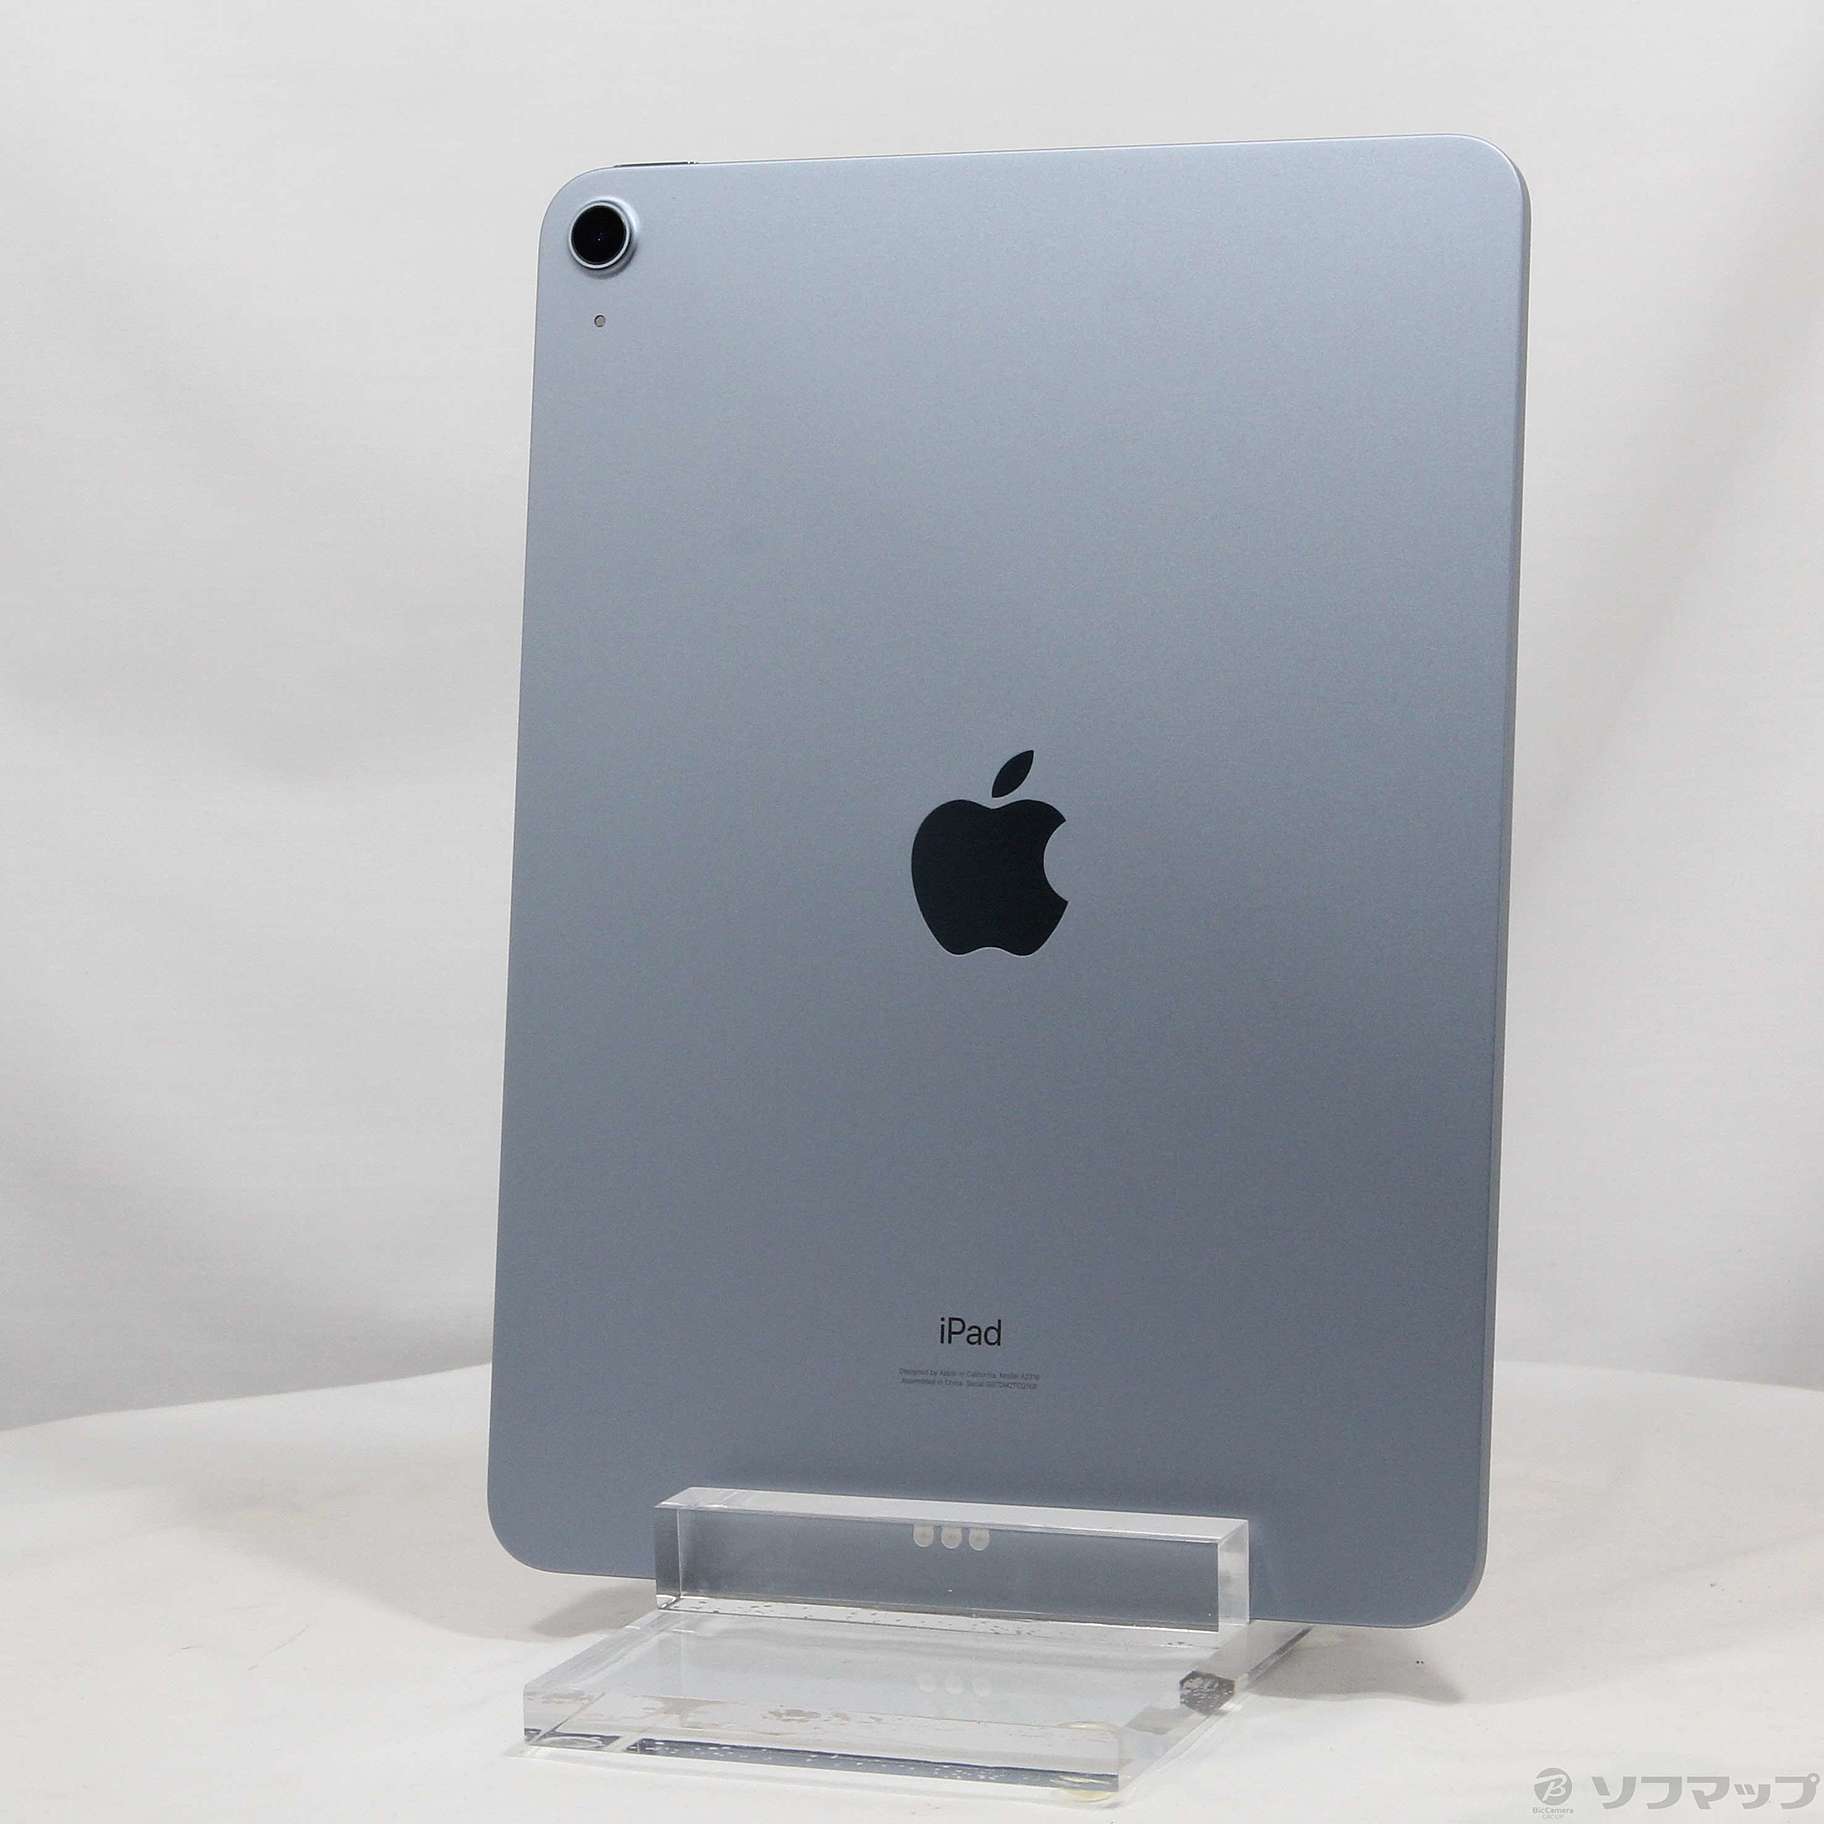 iPad Air （第4世代）256GB スカイブルー Wi-Fiモデル